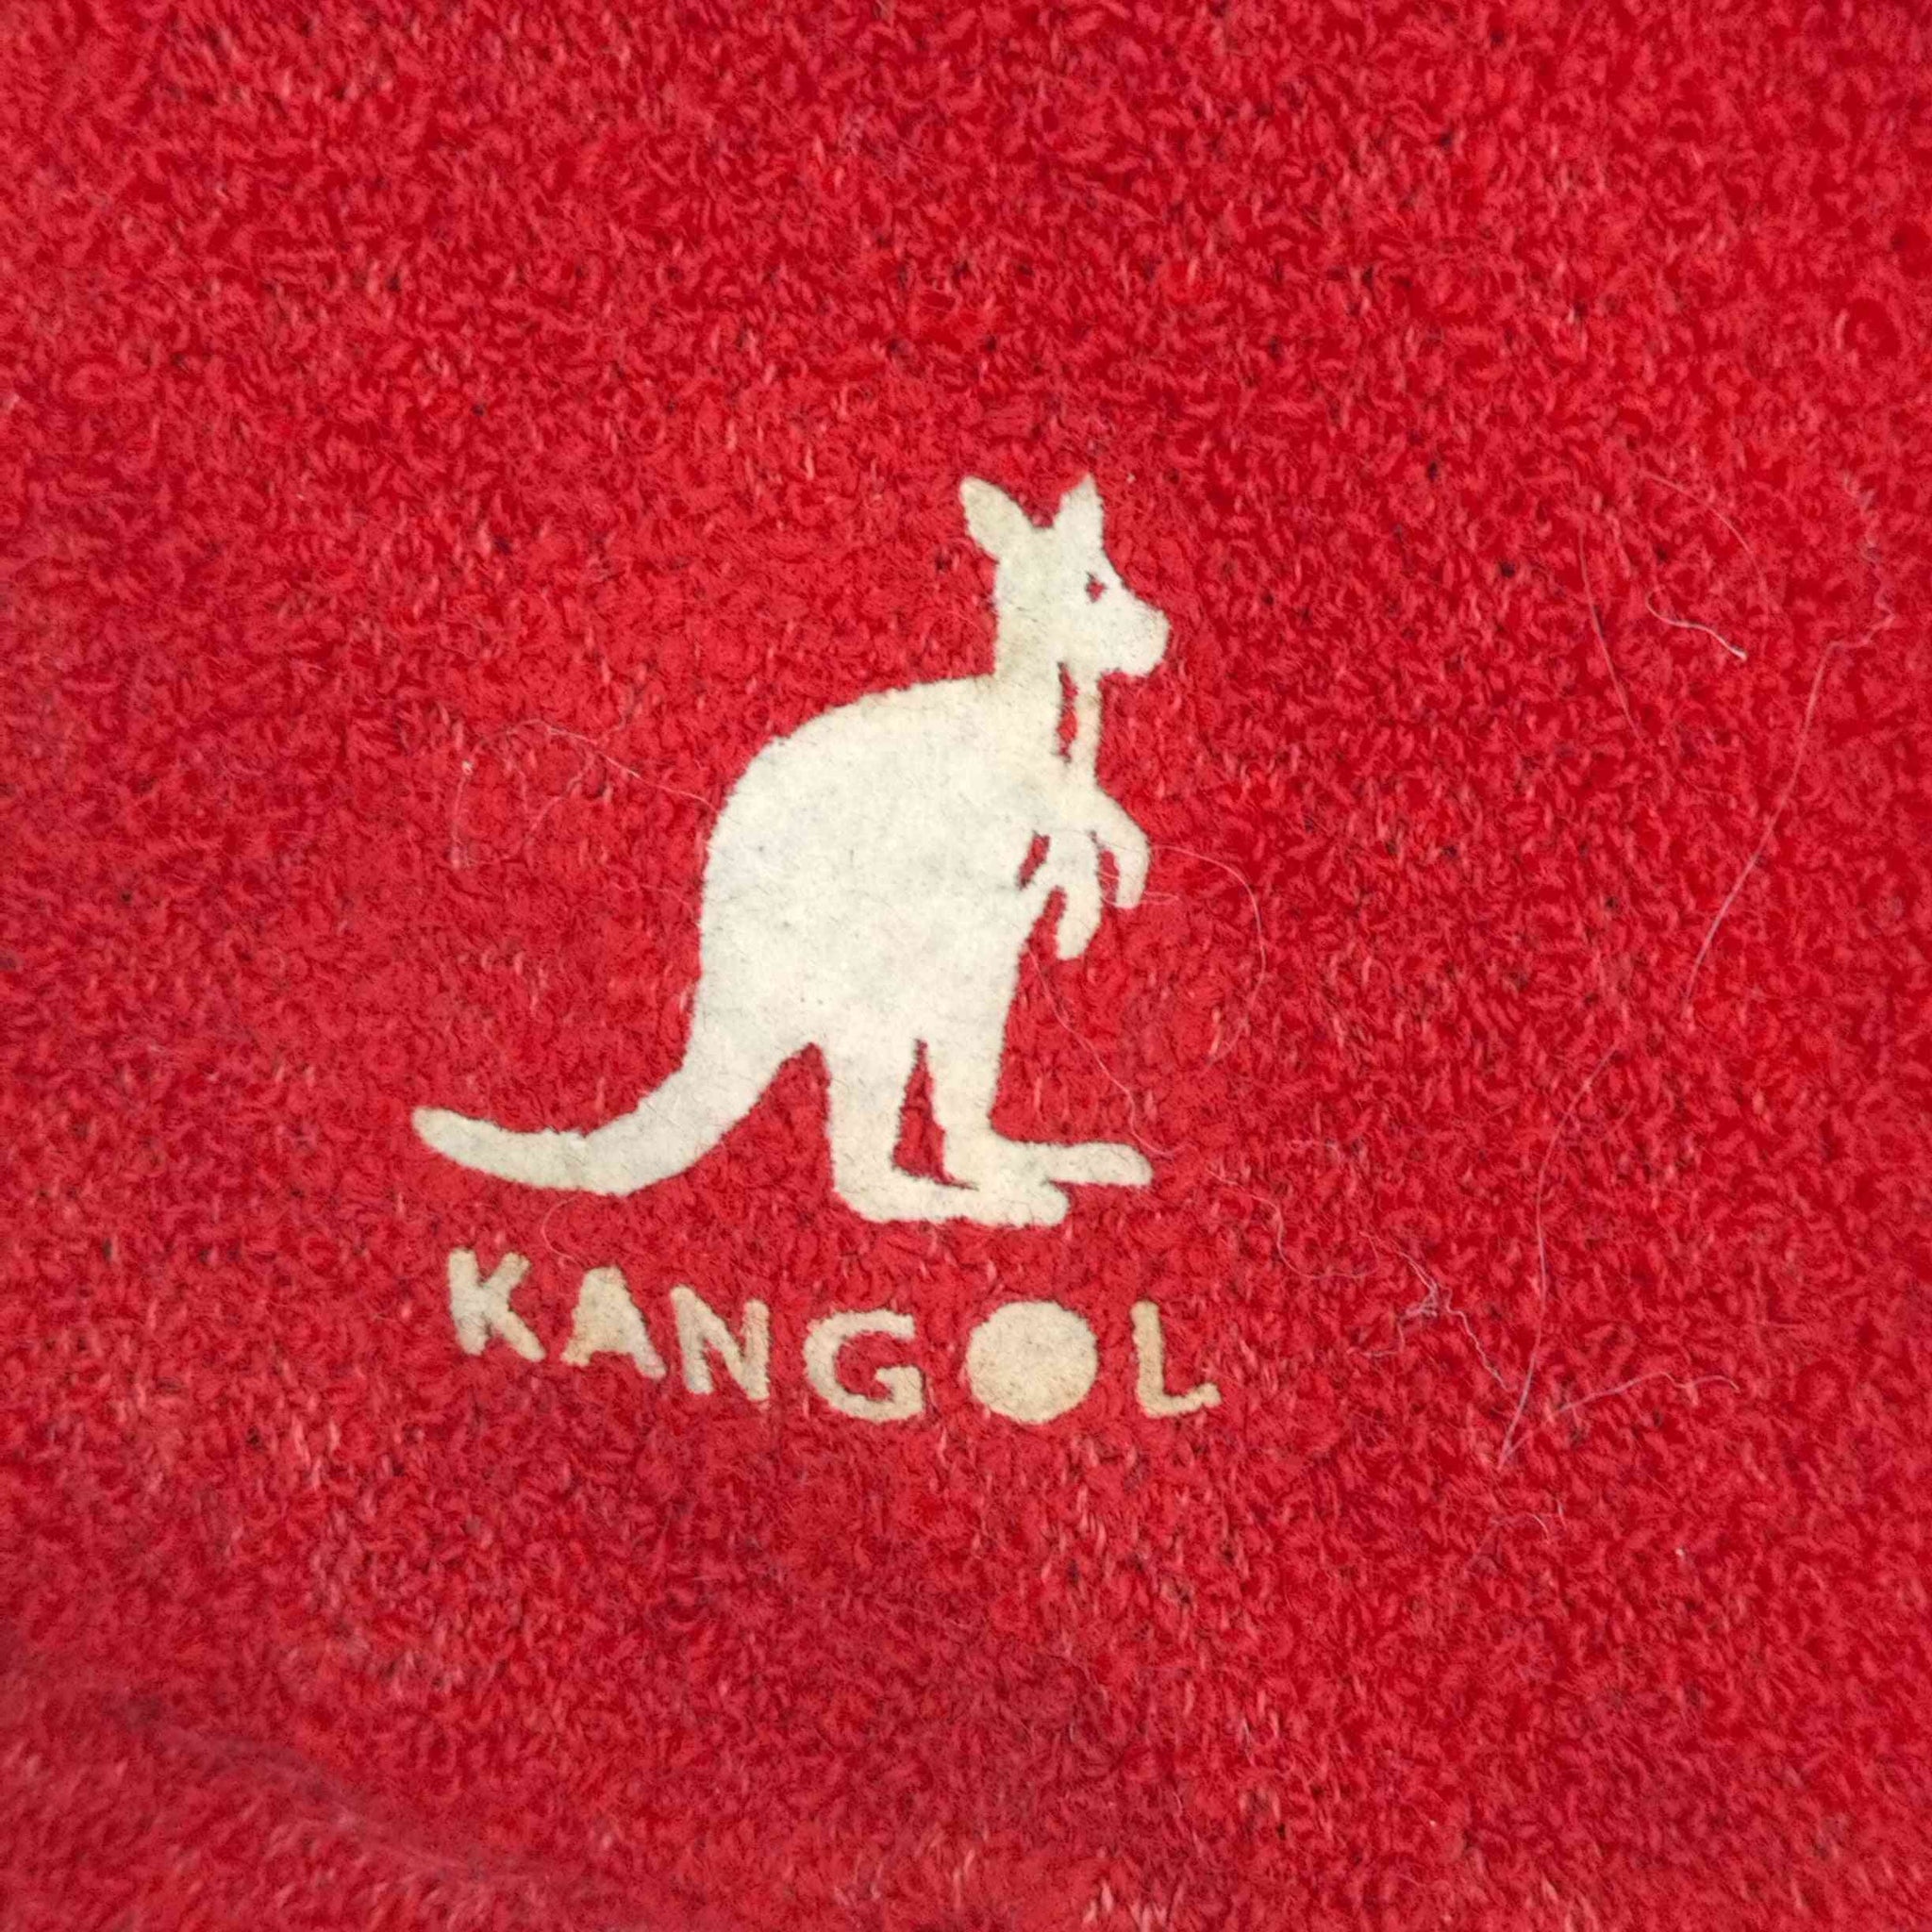 KANGOL(カンゴール)ロゴプリント バケットハット